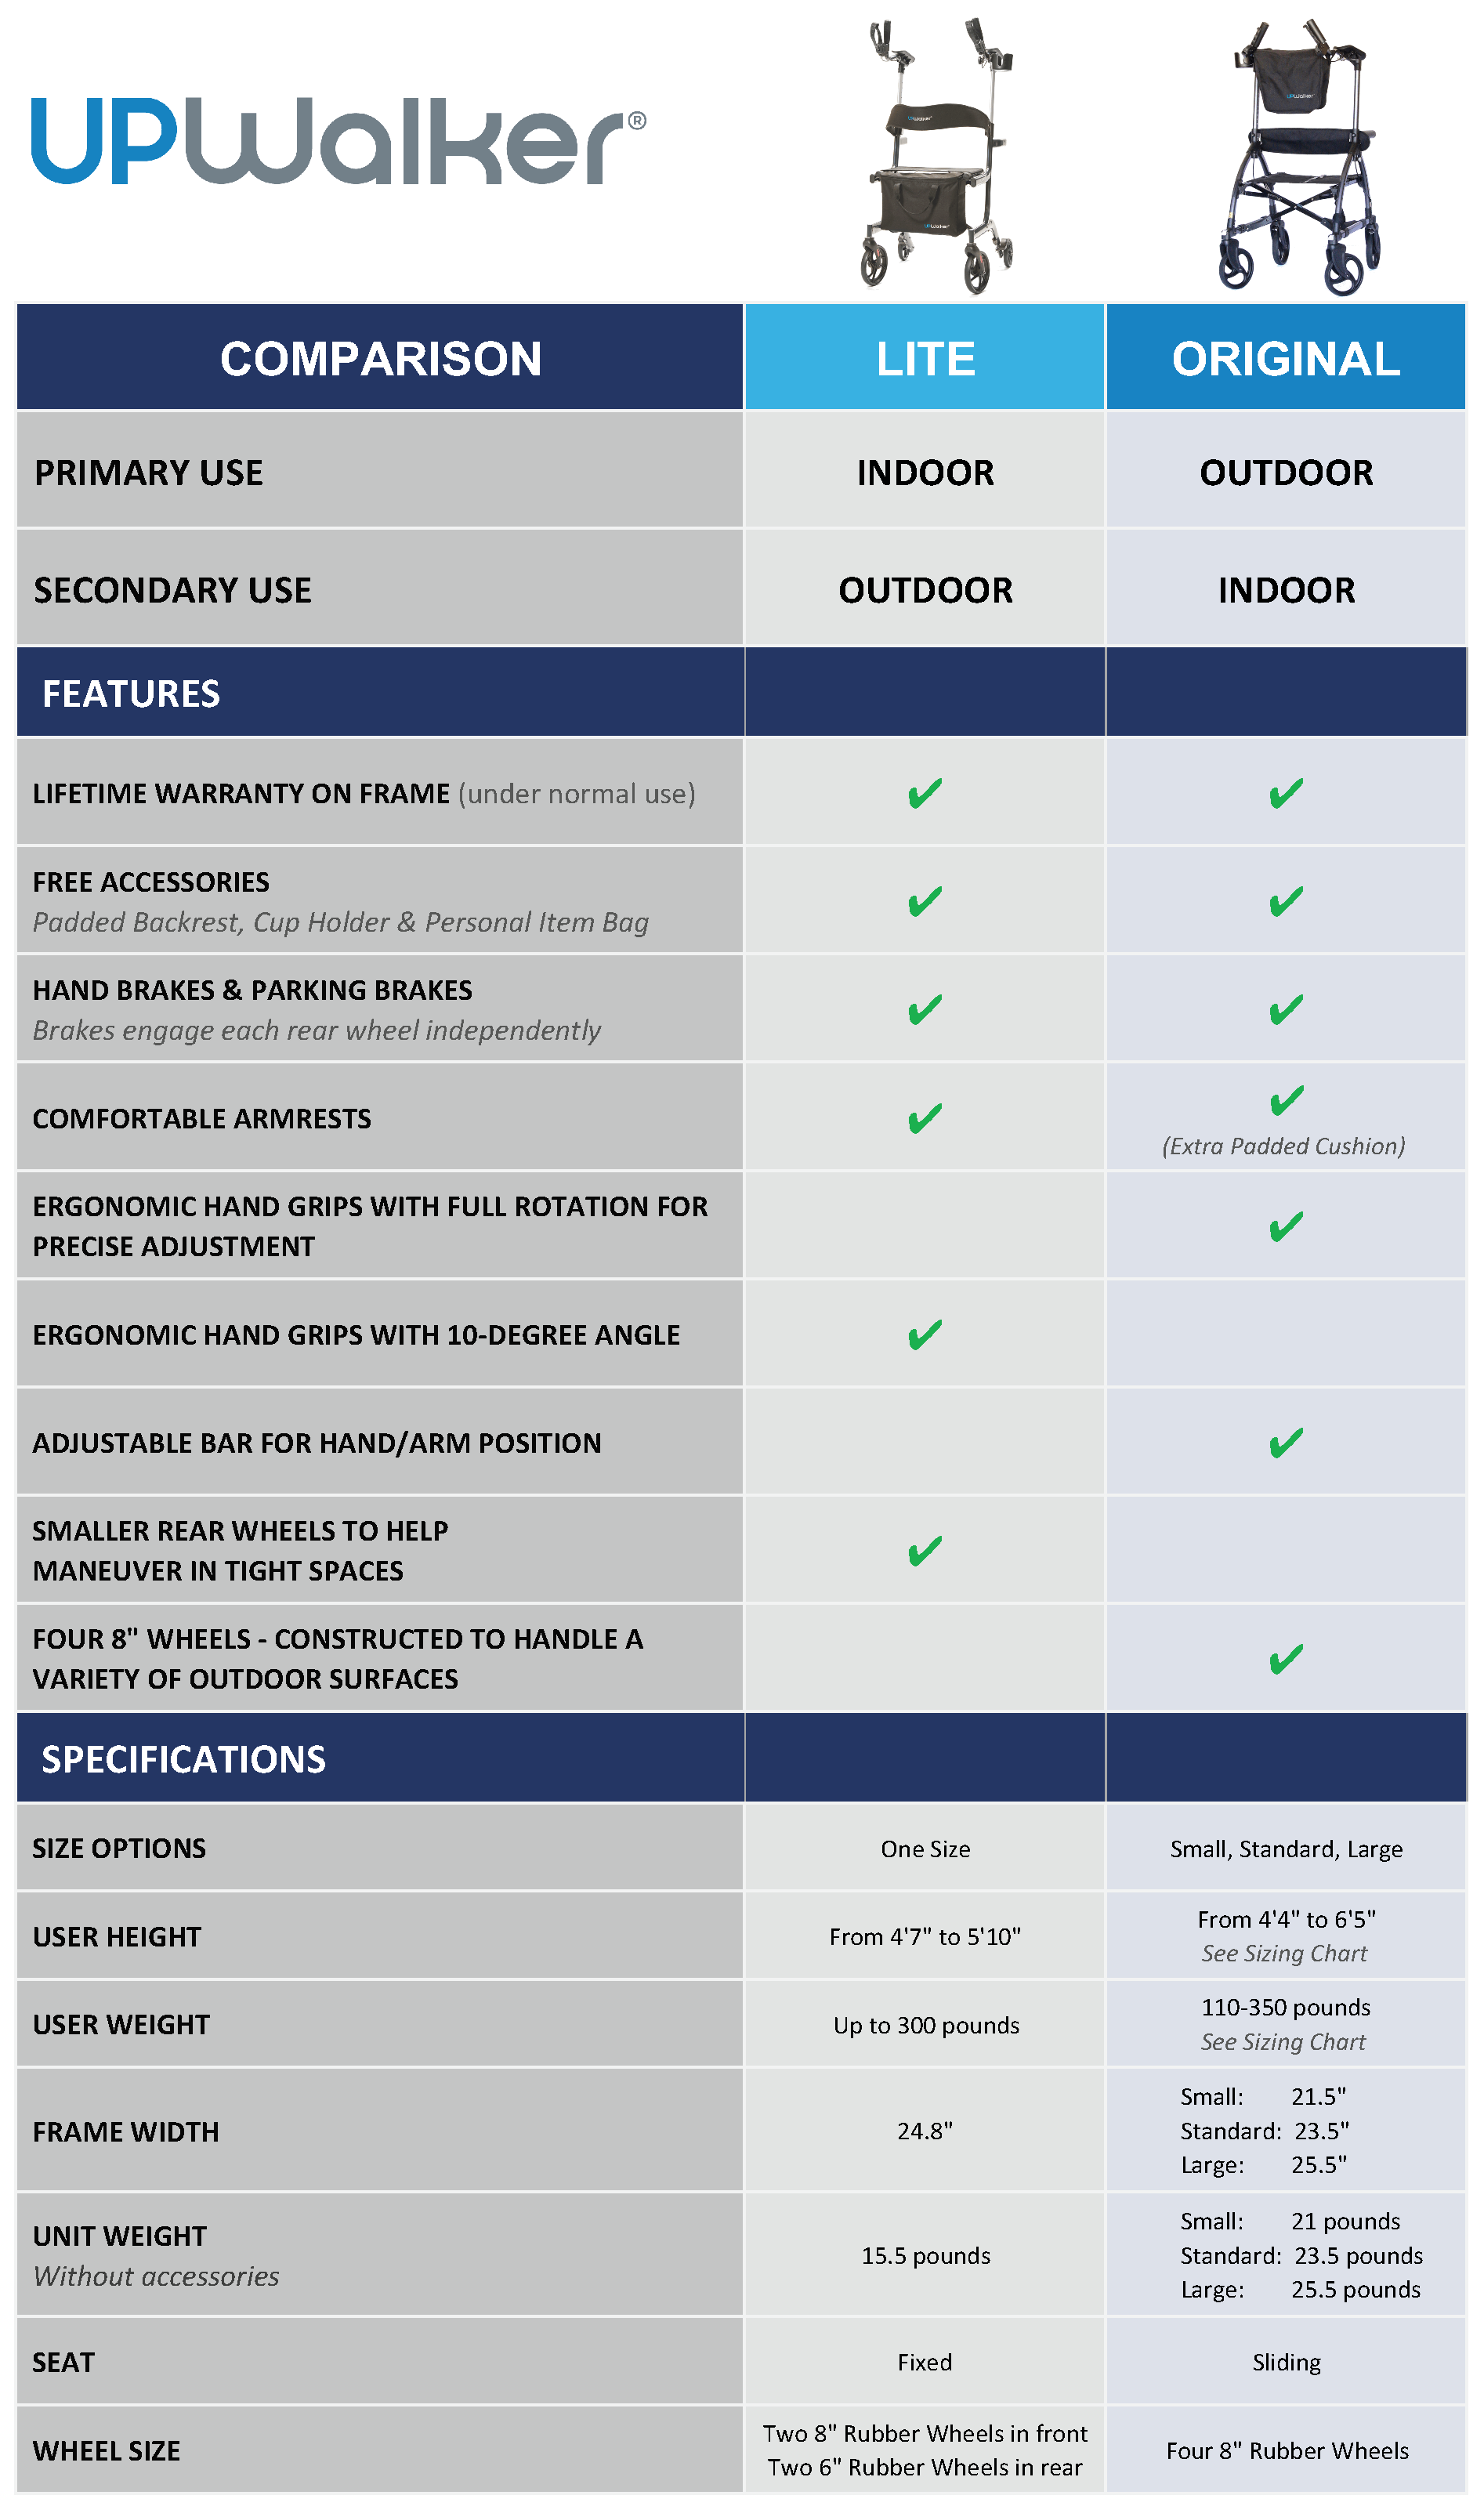 Windows 7 Product Comparison Chart